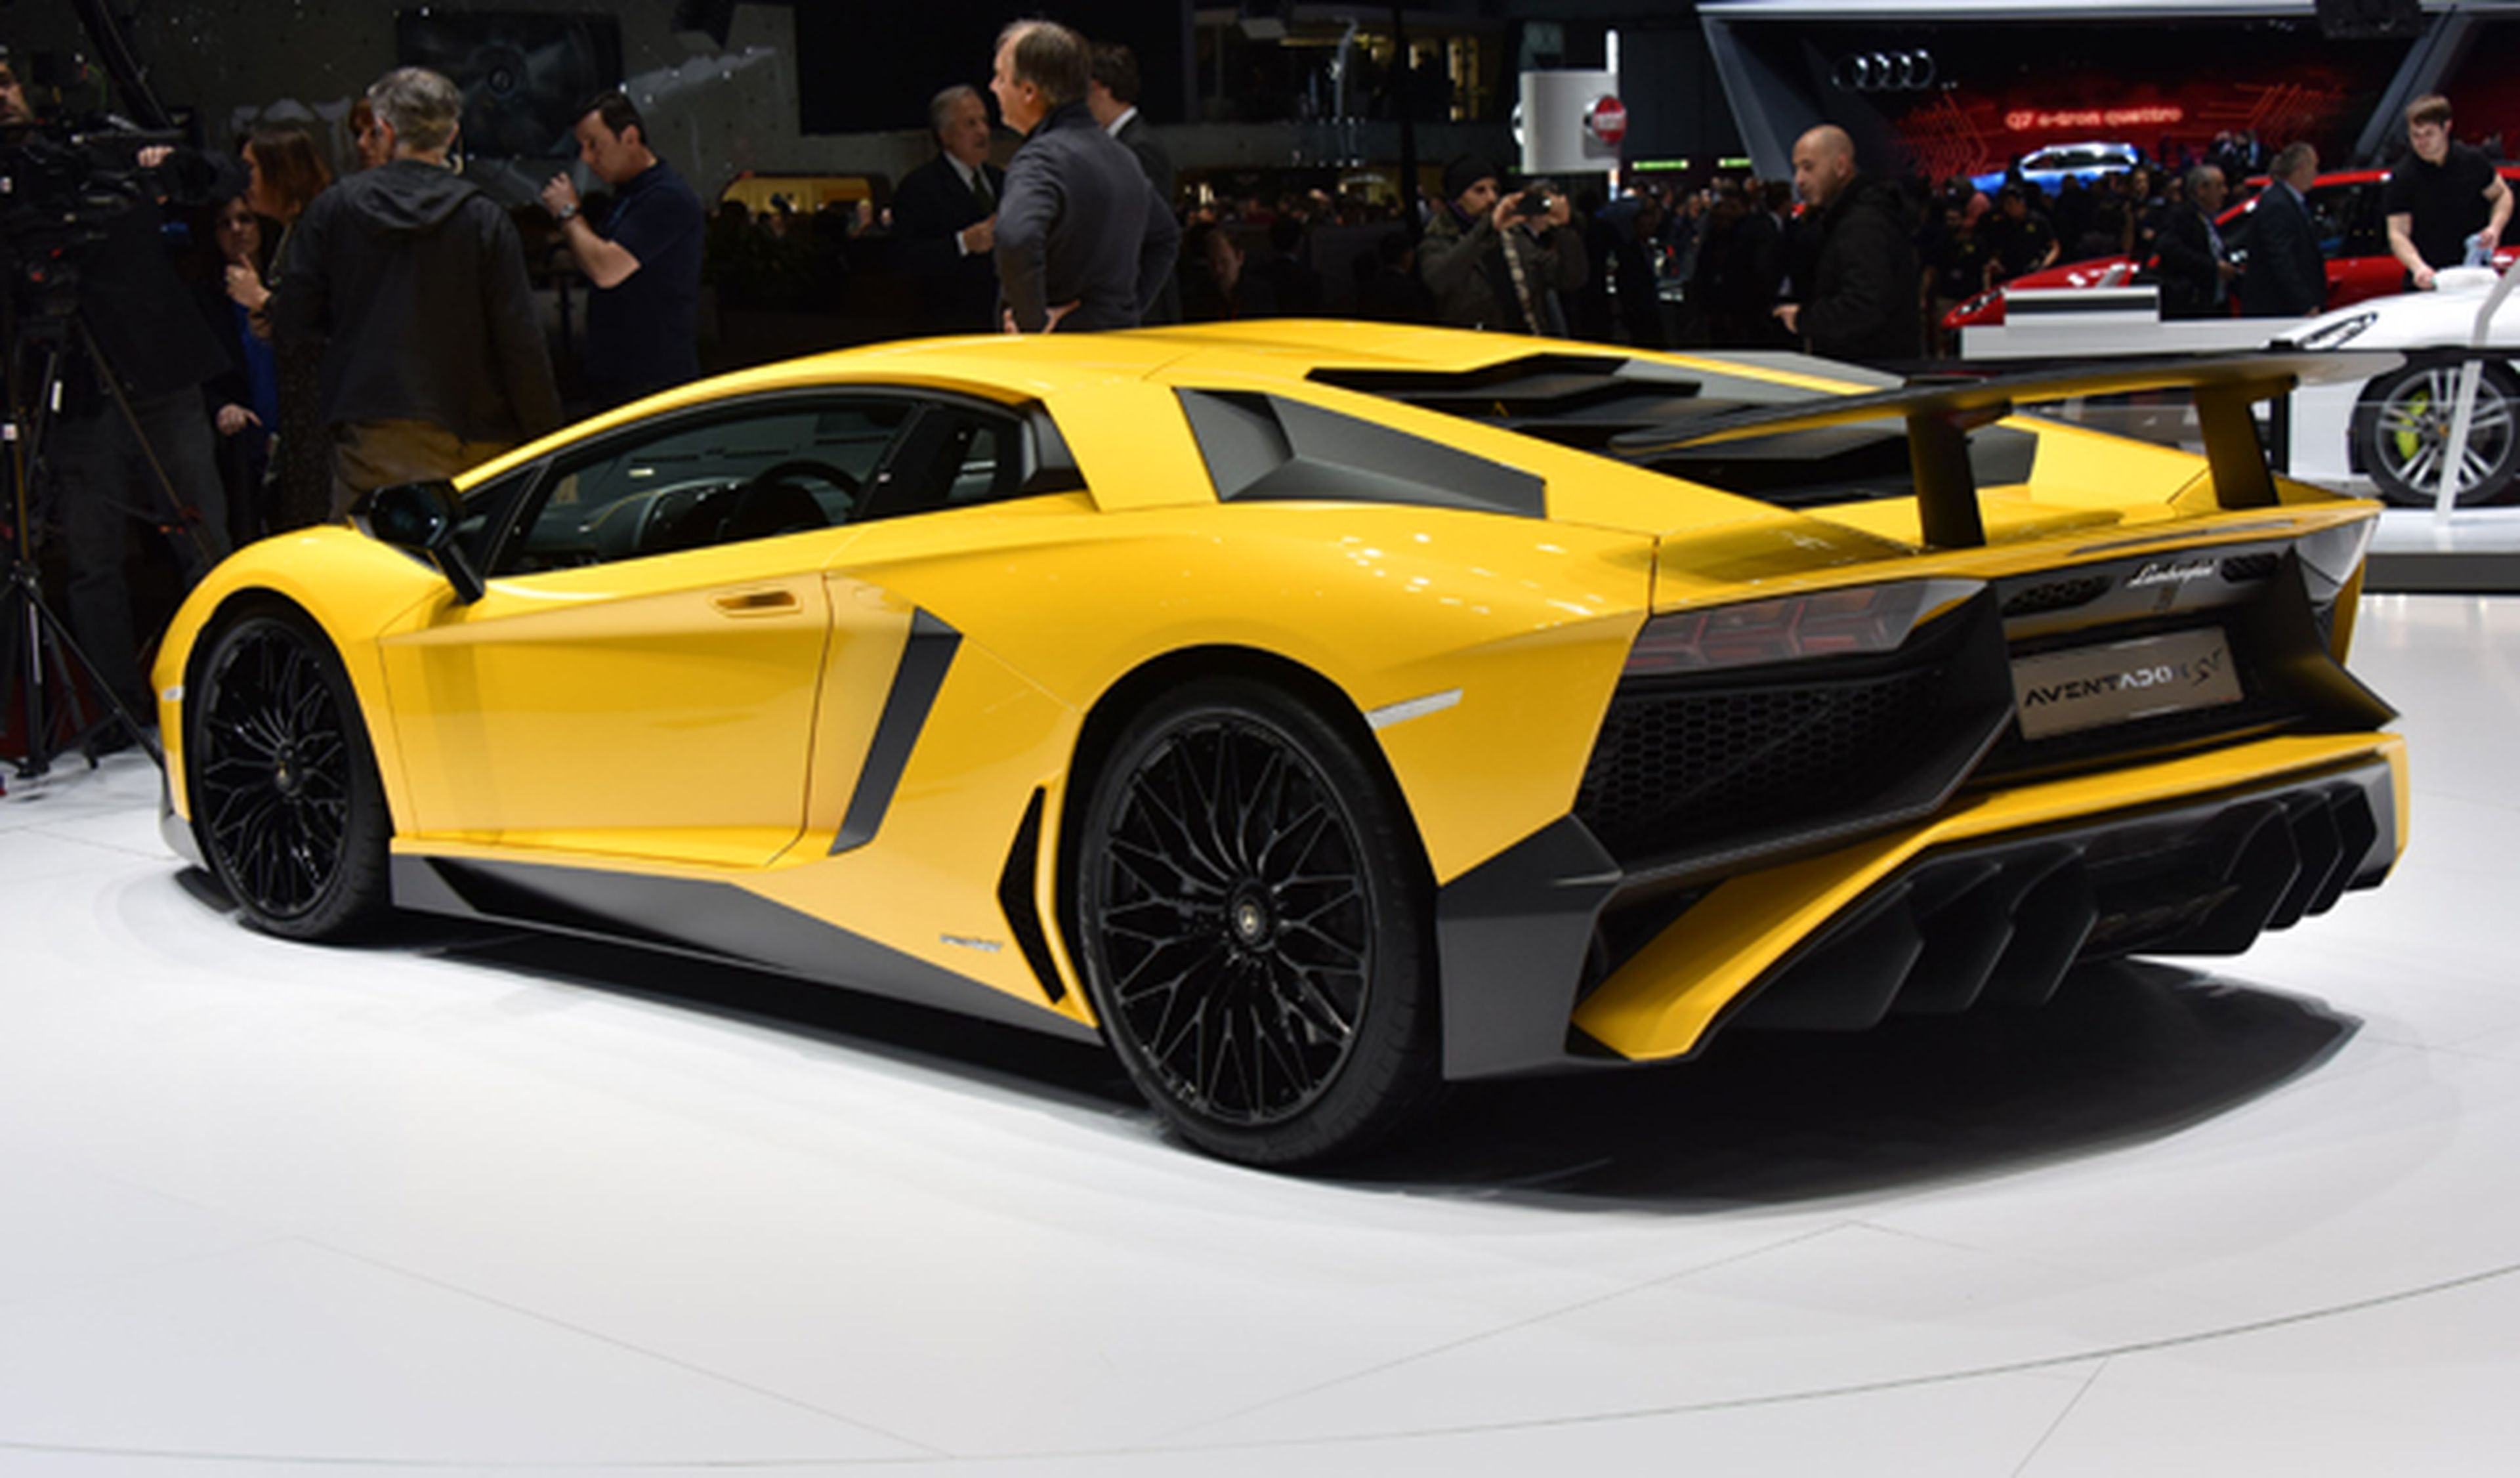 Fabricarán 600 unidades del Lamborghini Aventador SV